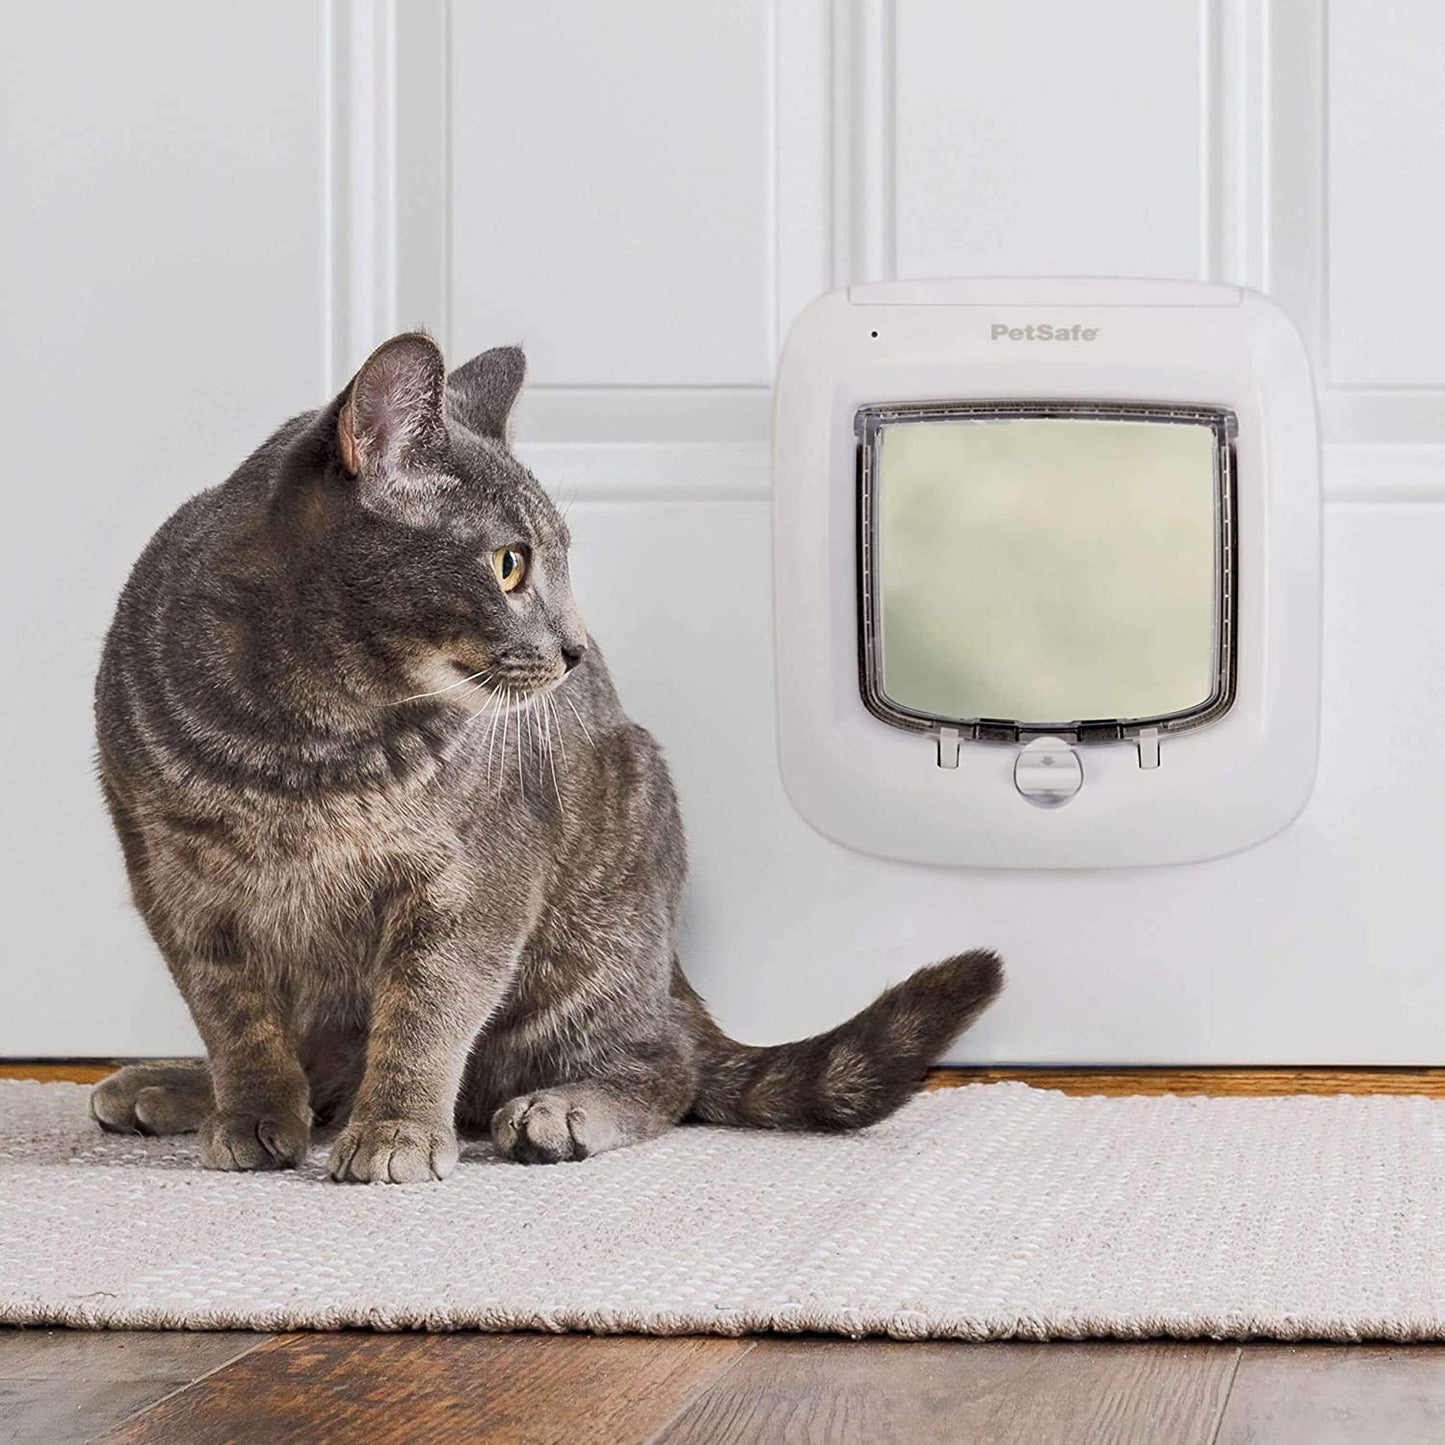 PetSafe Microchip Cat Door by Petsafe - PPA19-16145